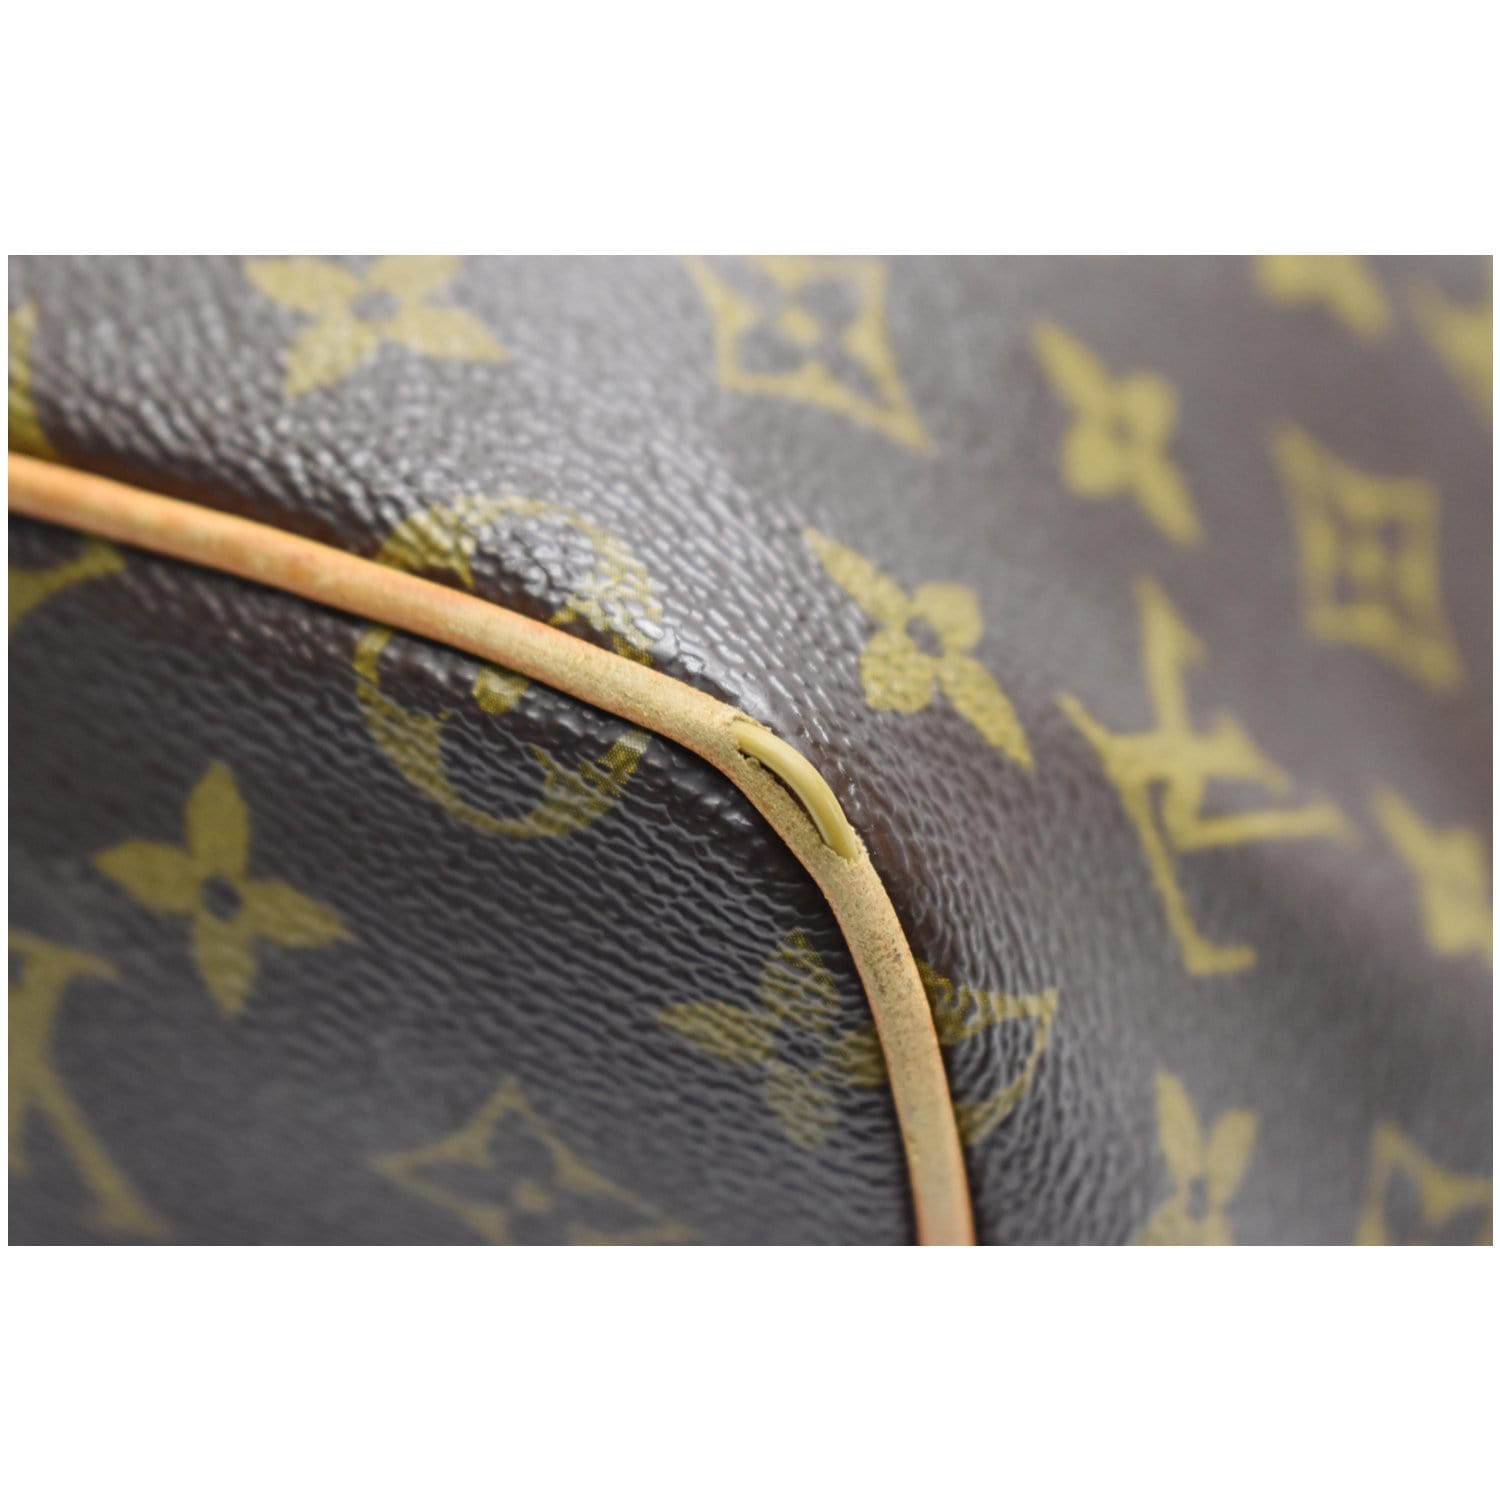 Louis Vuitton Brown Monogram Palermo PM Handbag MSWRXDU 144030002904